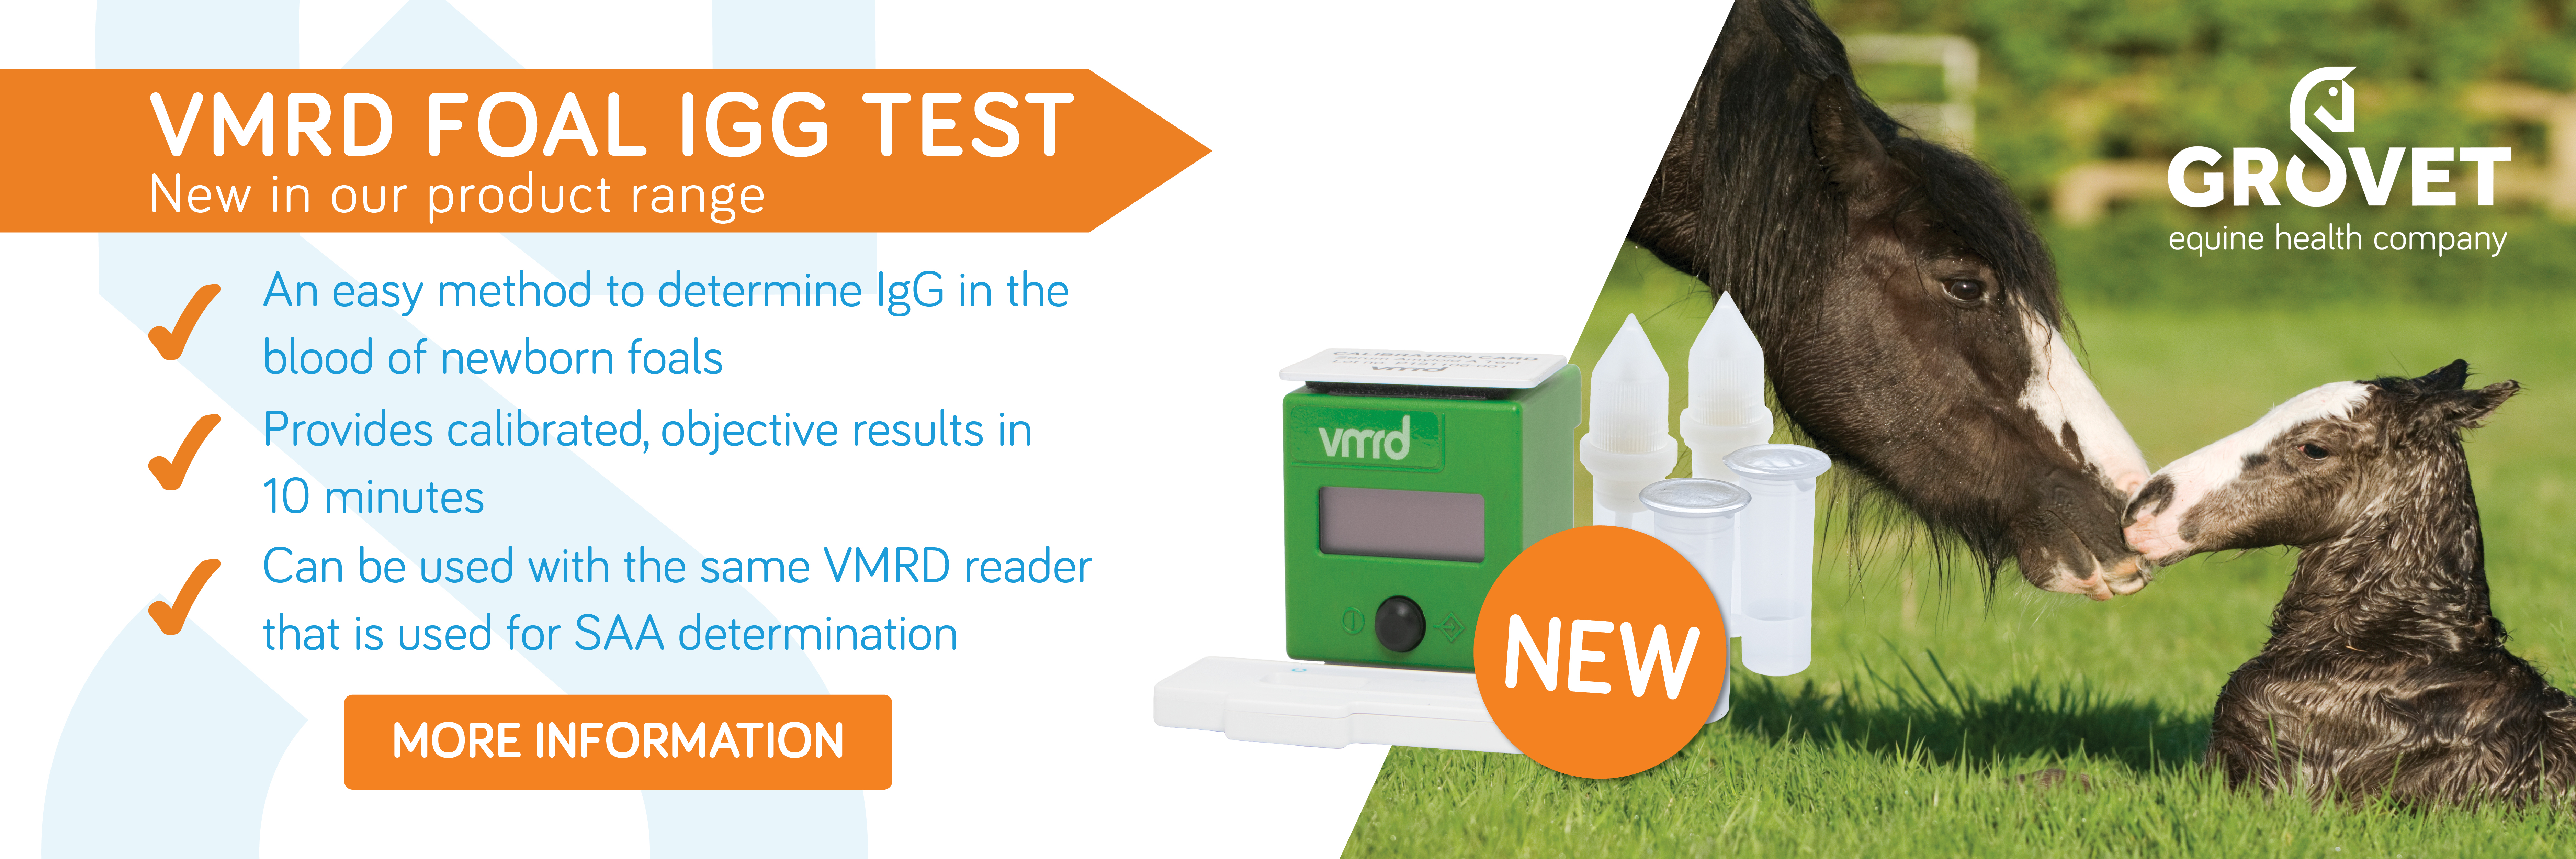 The VMRD IgG Foal Test is an easy method to determine IgG in het blood of newborn foals.